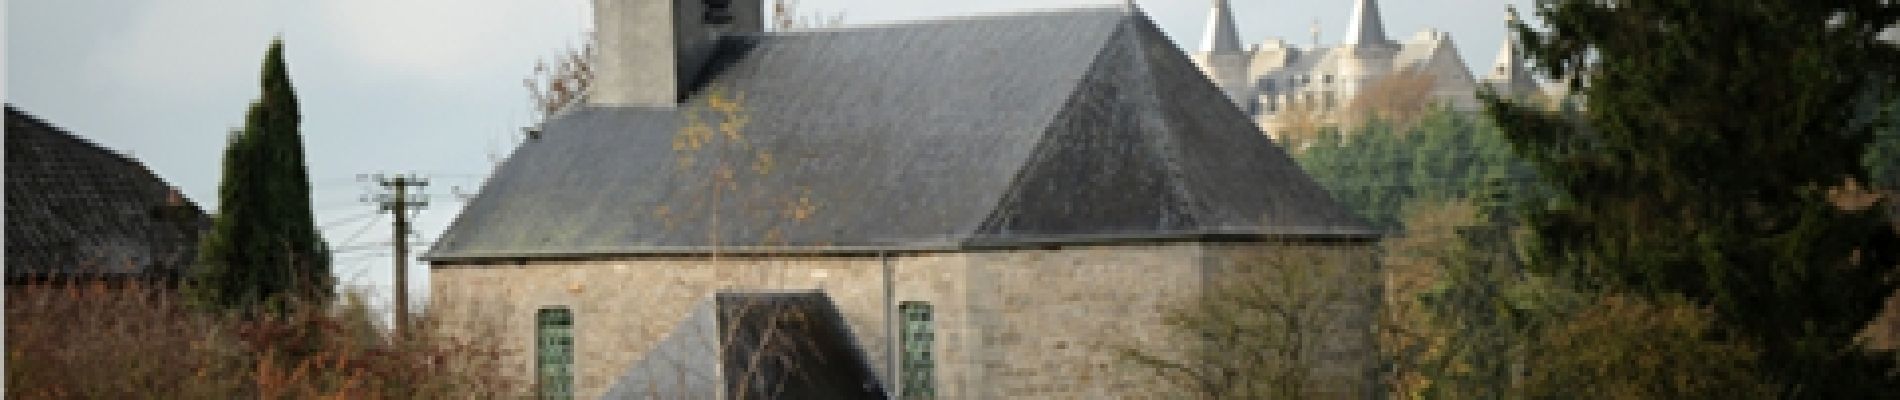 Point of interest Rochefort - Jamblinne Chapel - Photo